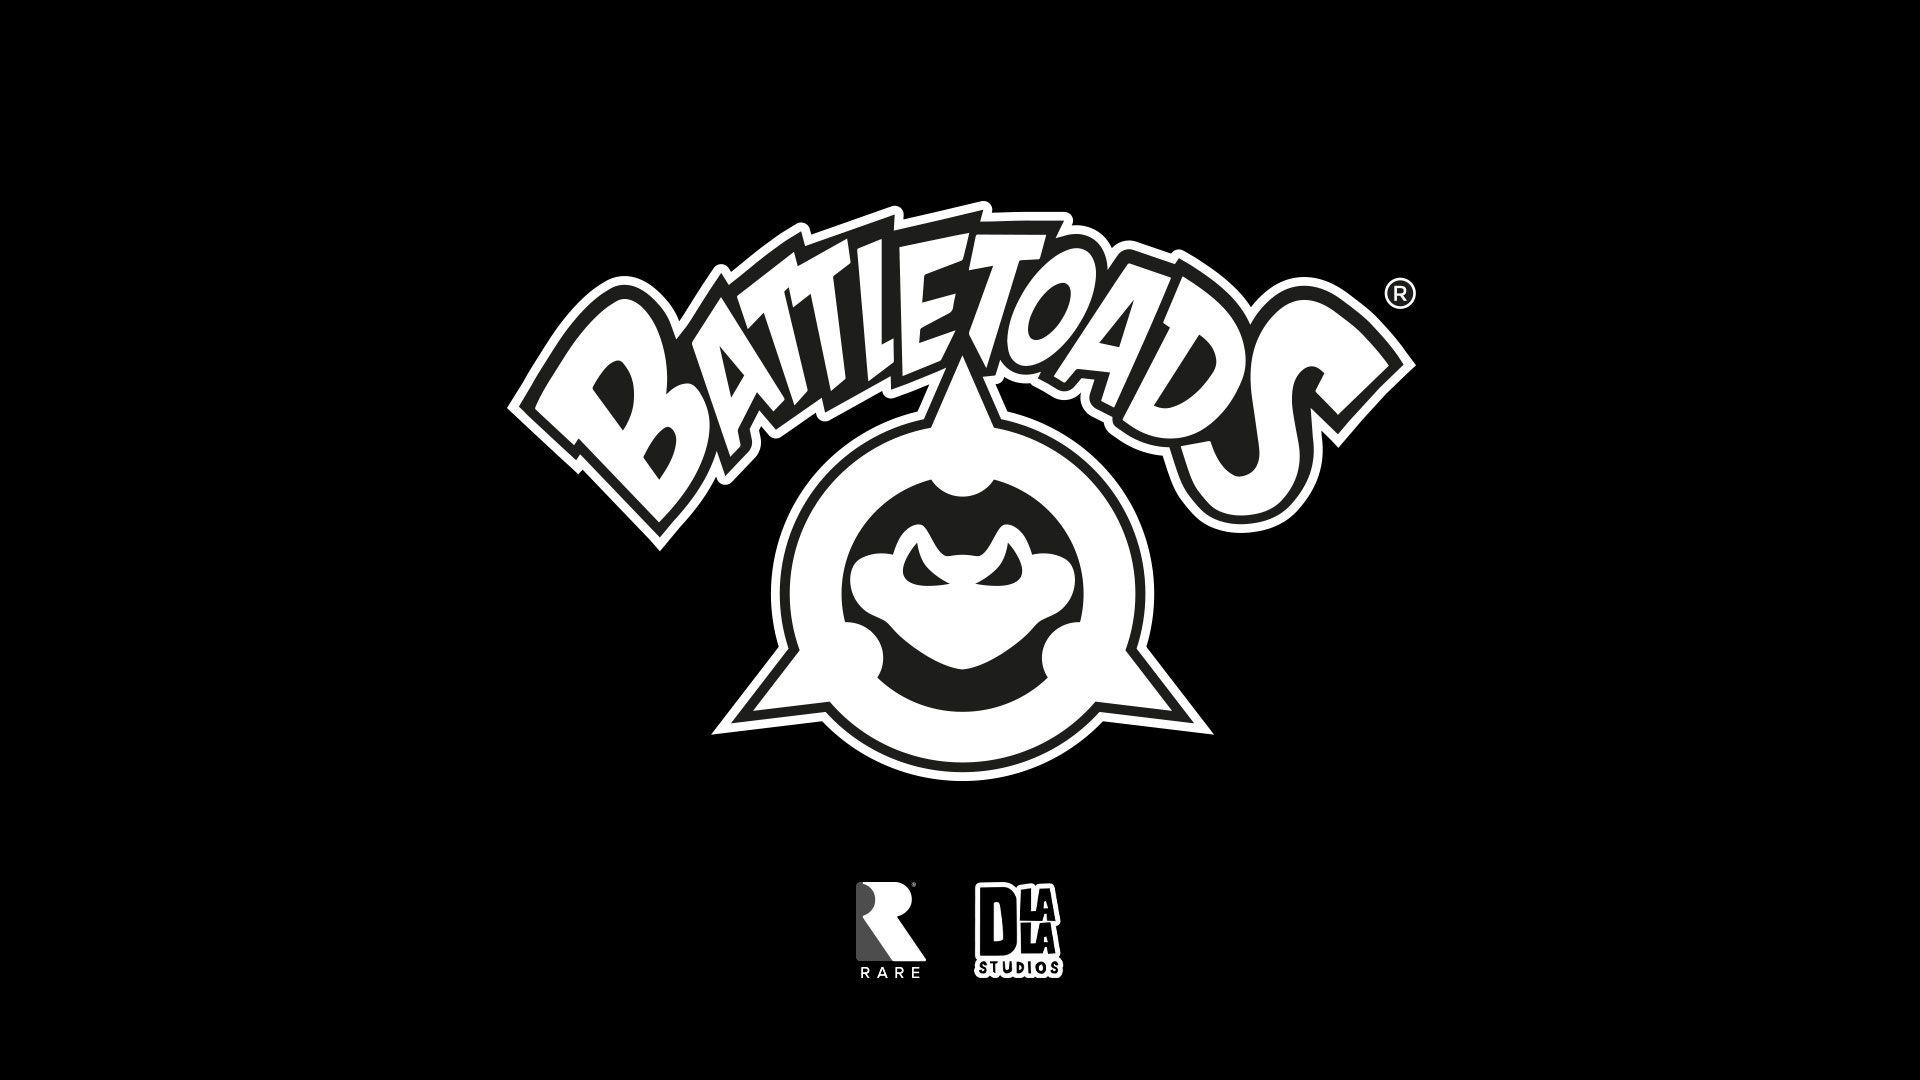 Battletoads Logo - Battletoads for Xbox One